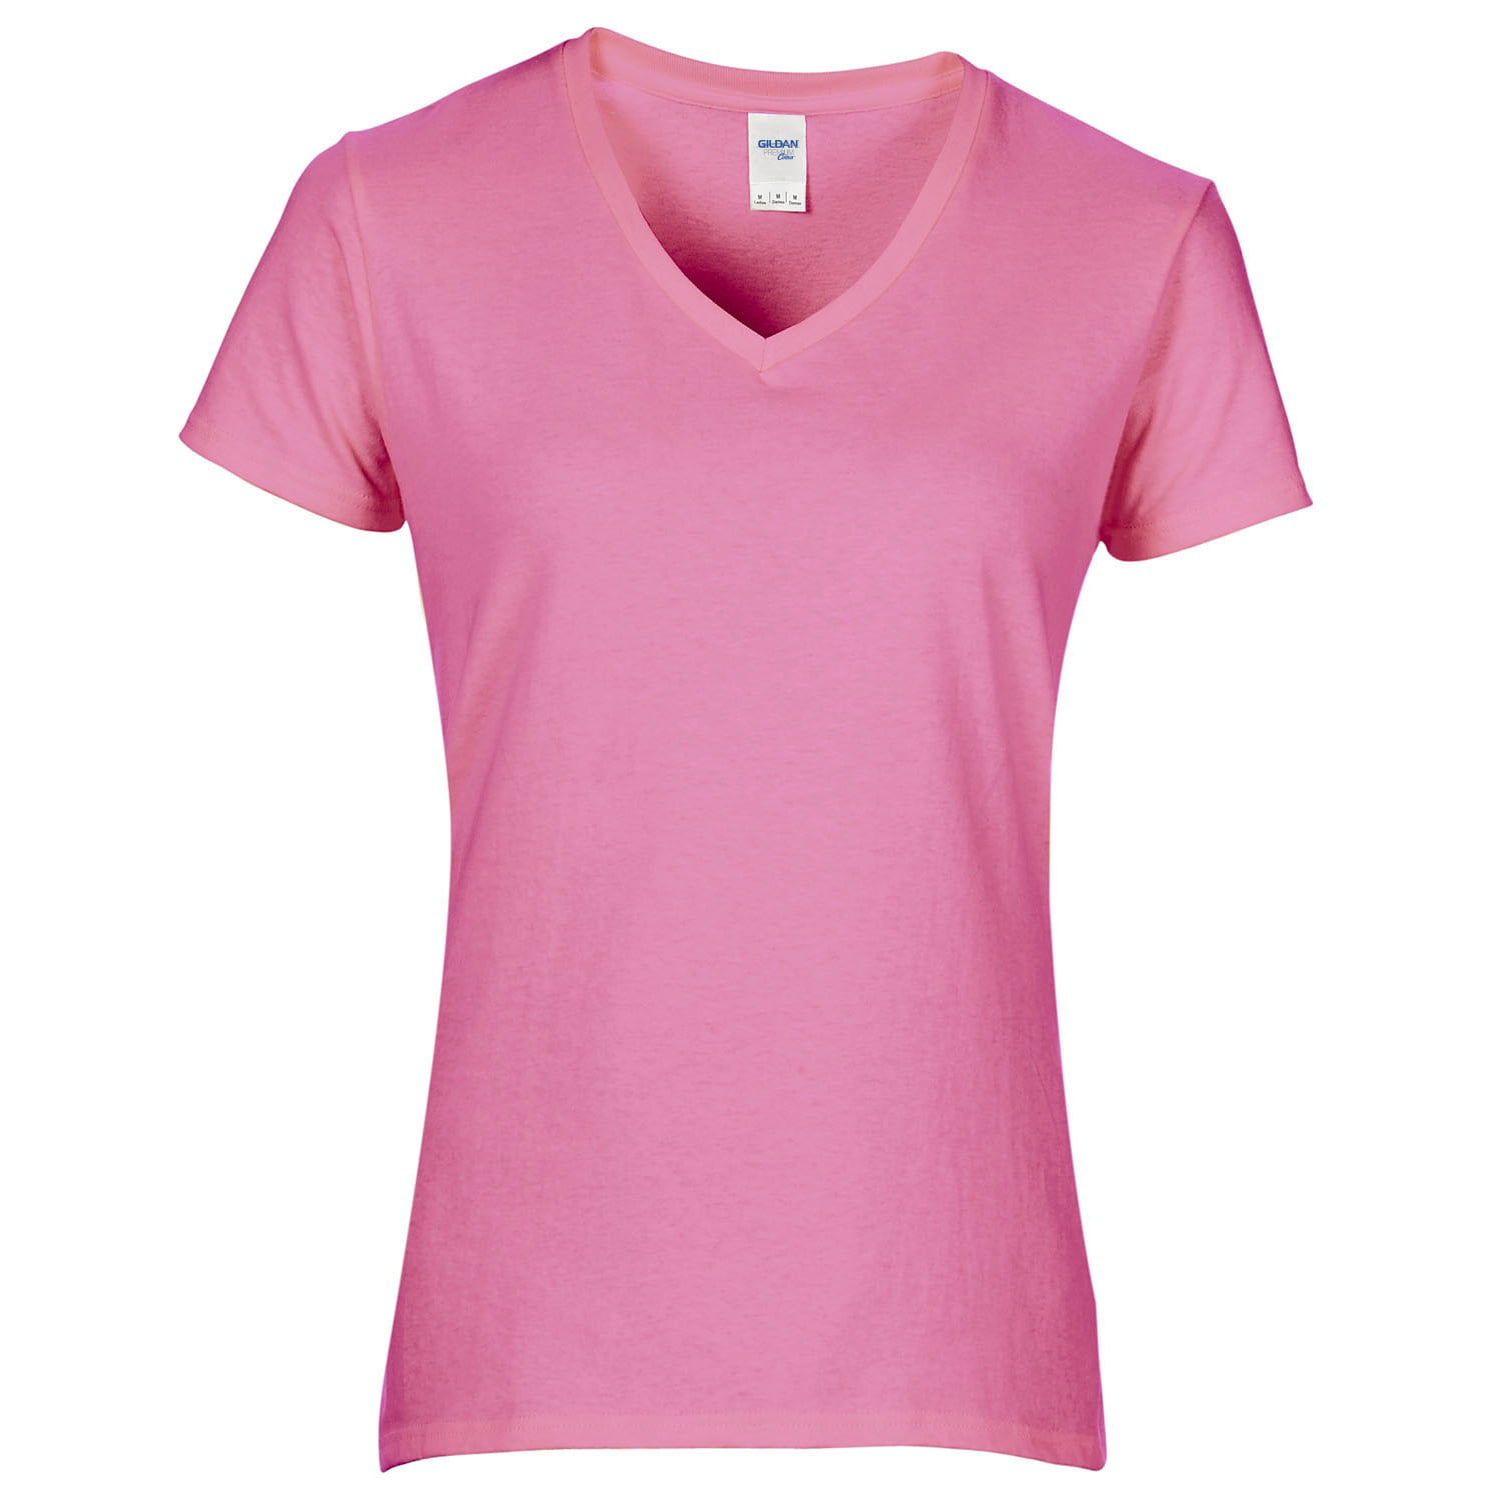 Gildan Womens/Ladies Premium Cotton V-Neck T-Shirt 